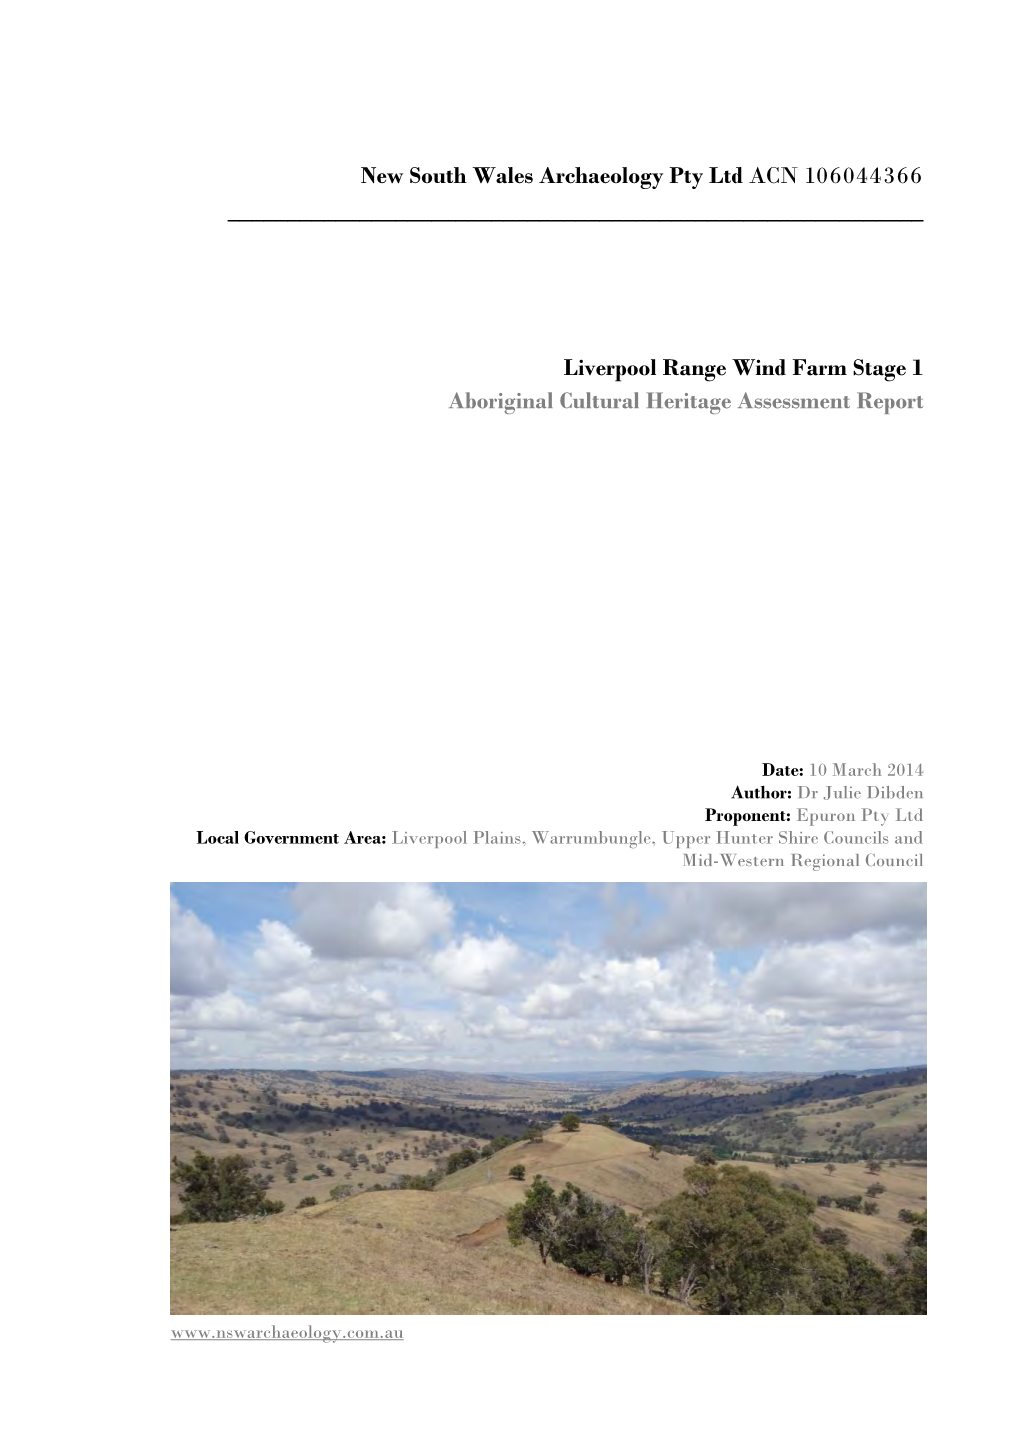 Liverpool Range Wind Farm Stage 1 Aboriginal Cultural Heritage Assessment Report